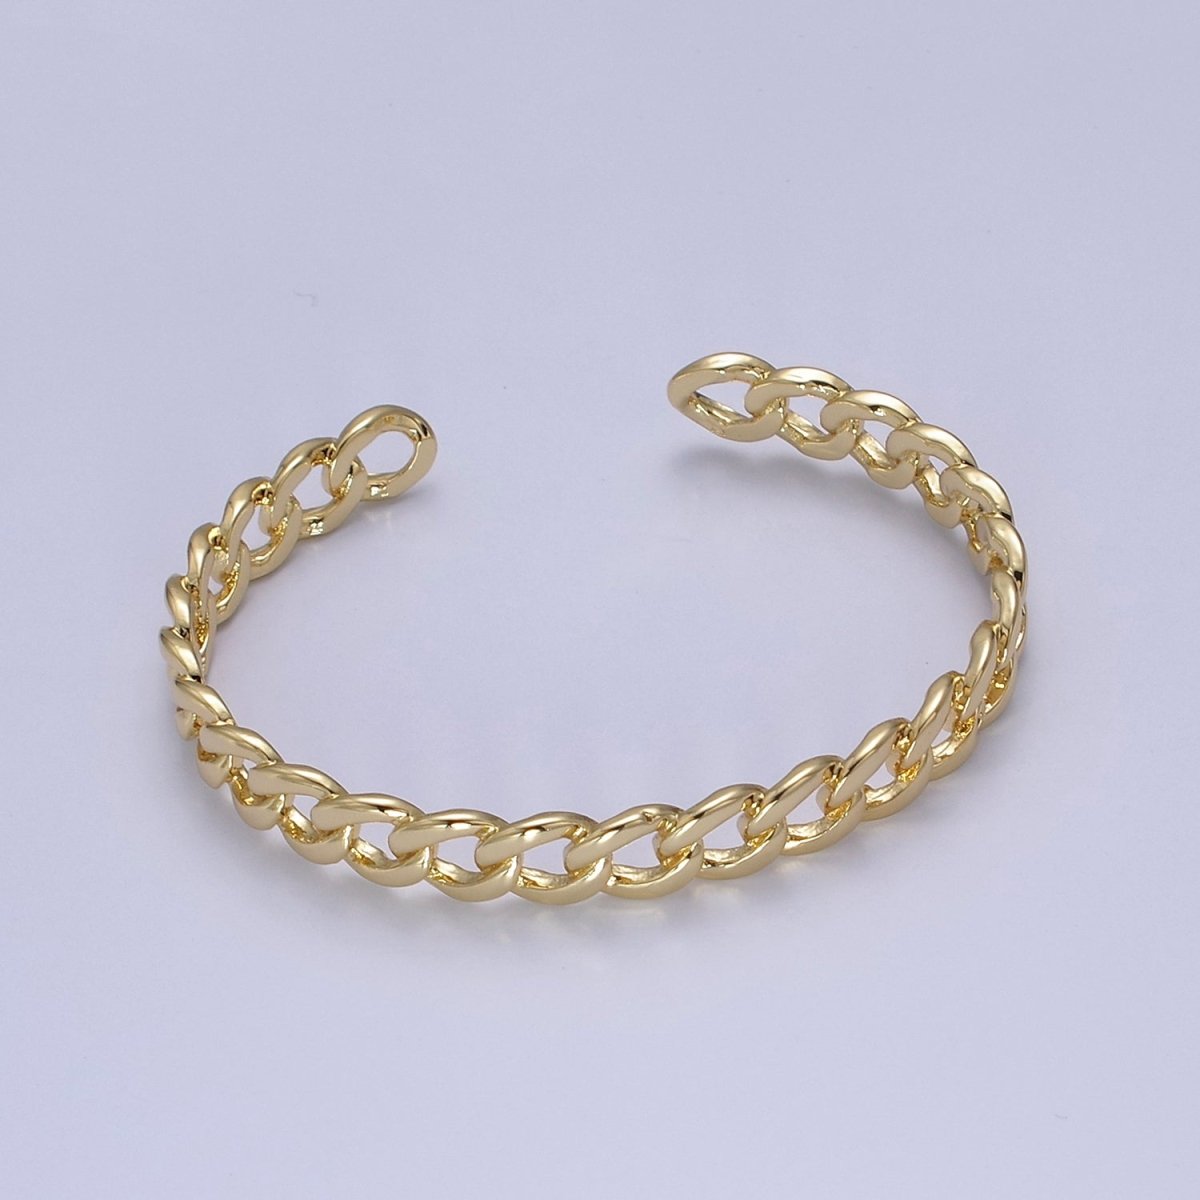 Wholesale Chain Link Cuff Bangle Bracelet, curb link bracelet, gold bangle, cuff bracelet, gold cuff, wrist cuff, stackable bracelet | WA-678 Clearance Pricing - DLUXCA